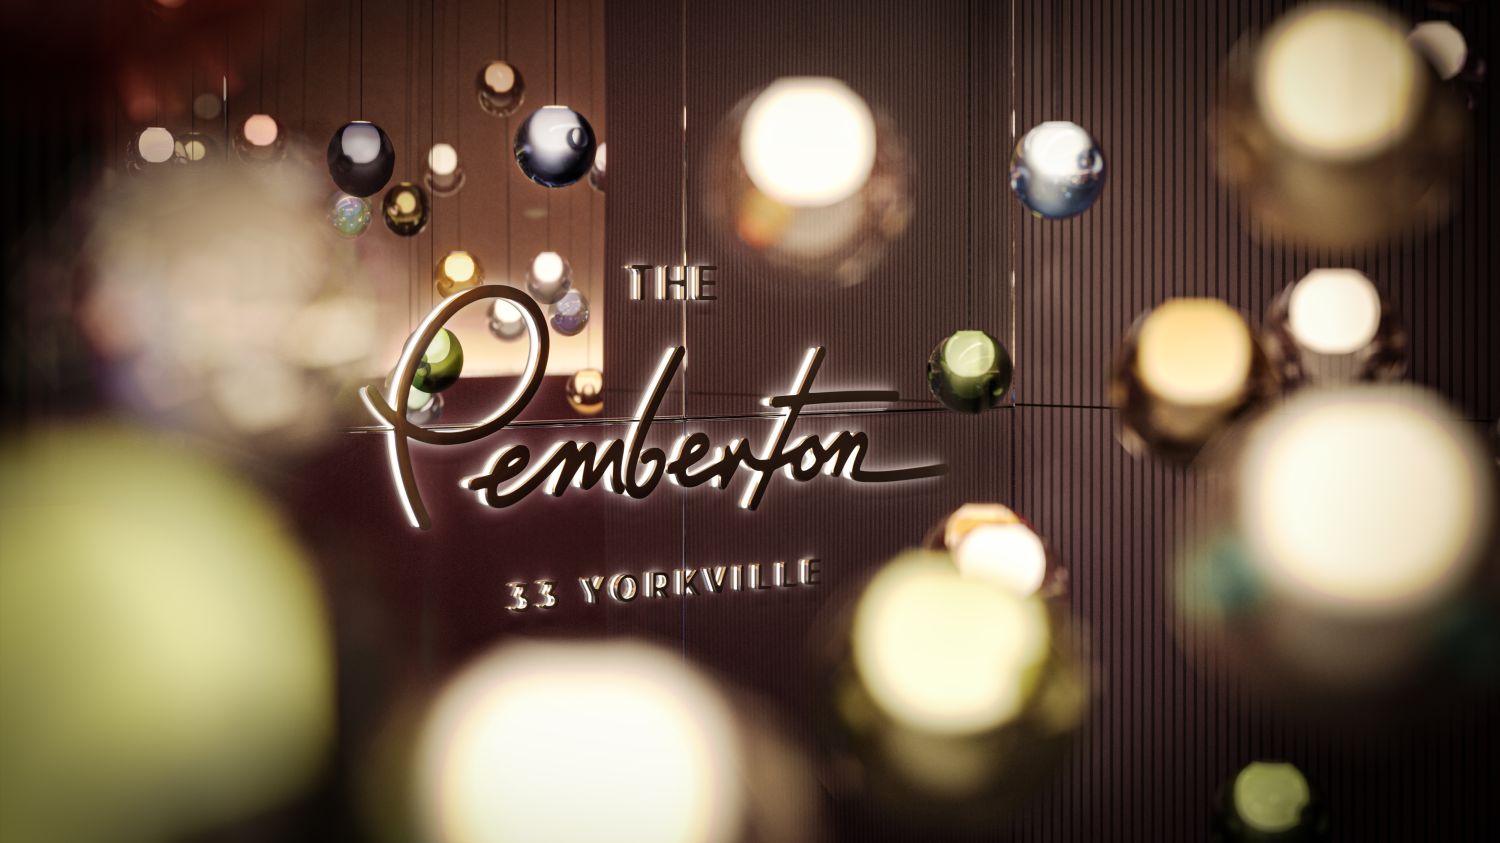 The Pemberton – 33 Yorkville